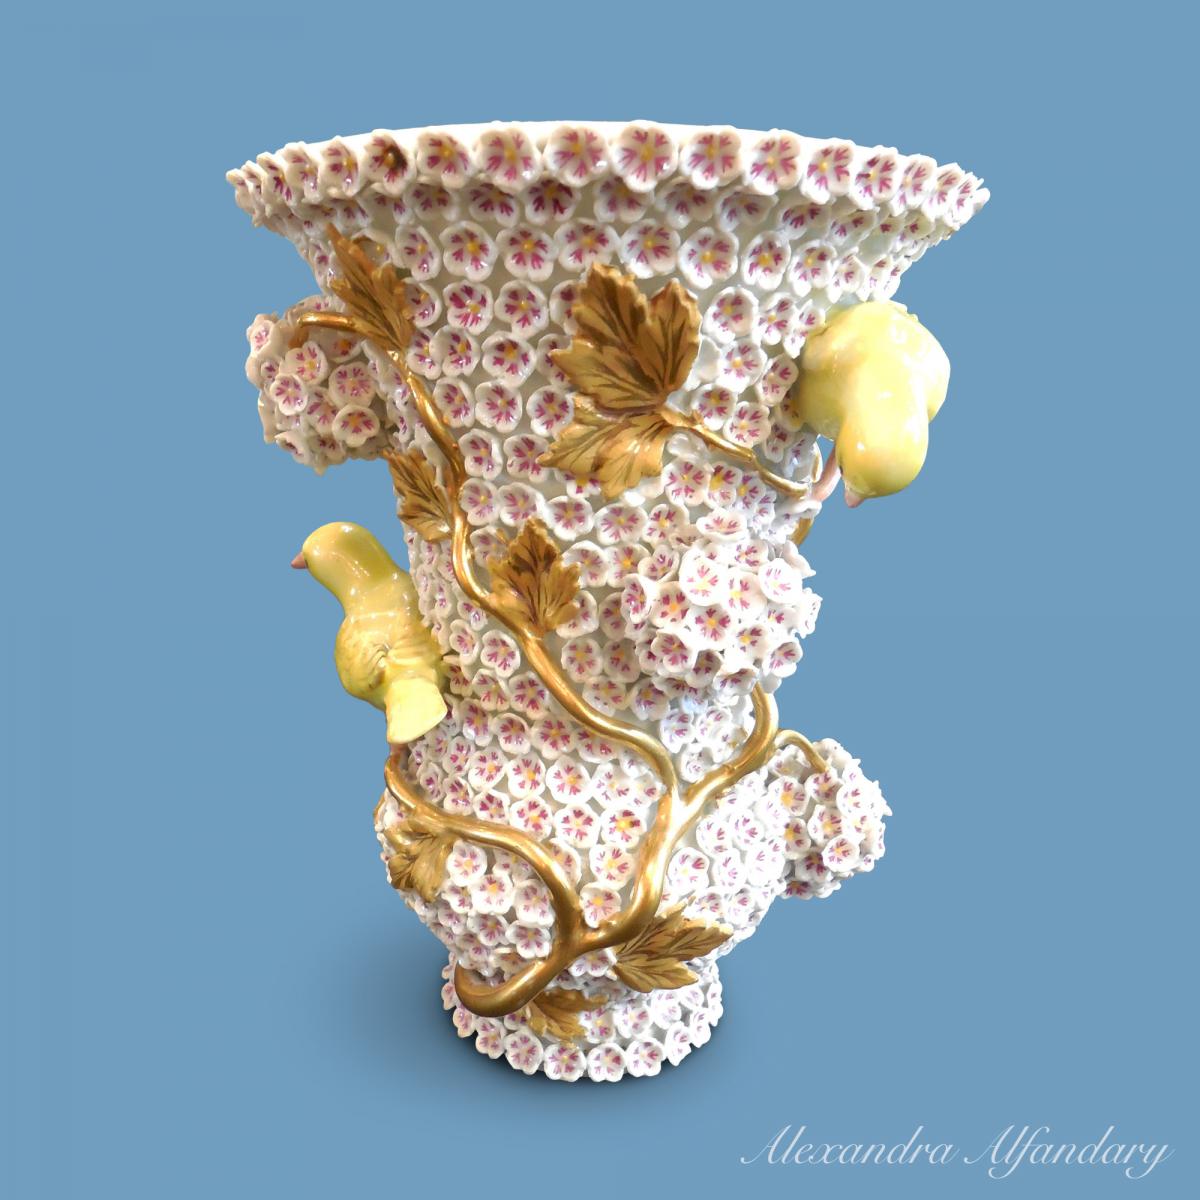 A Pair Of Meissen Campagna Shaped Porcelain Snowball (Schneeball) Vases, circa 1860-70